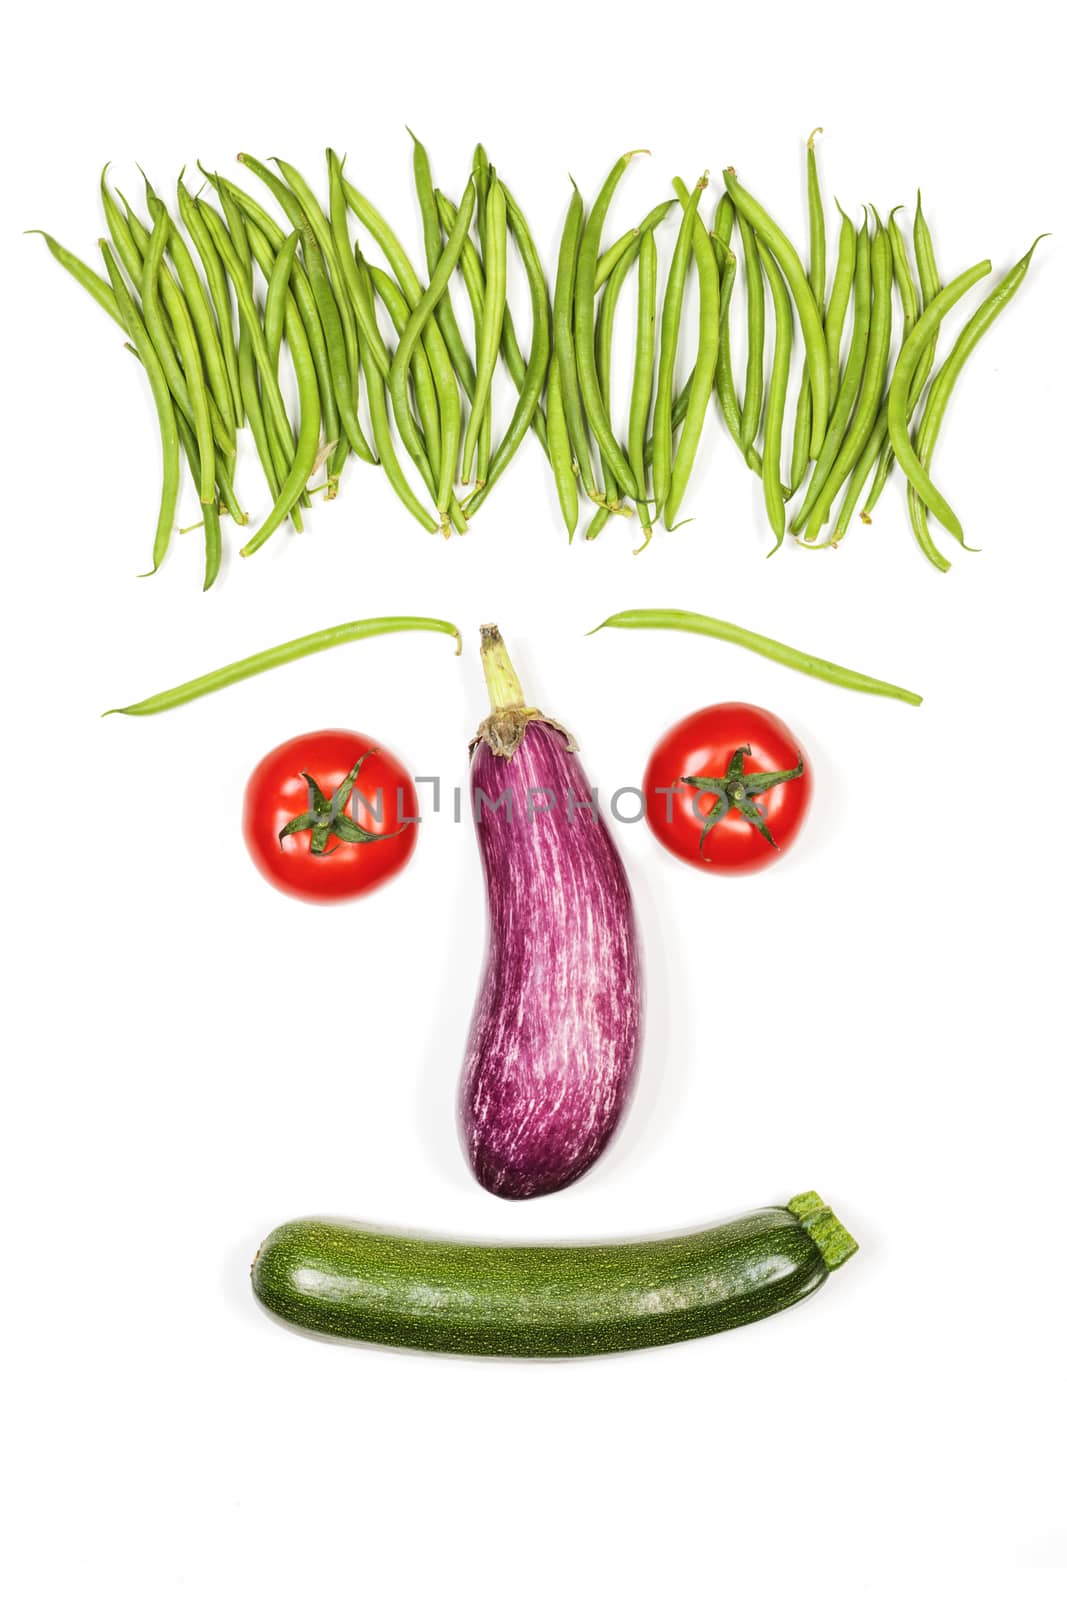 vegetables face on white background